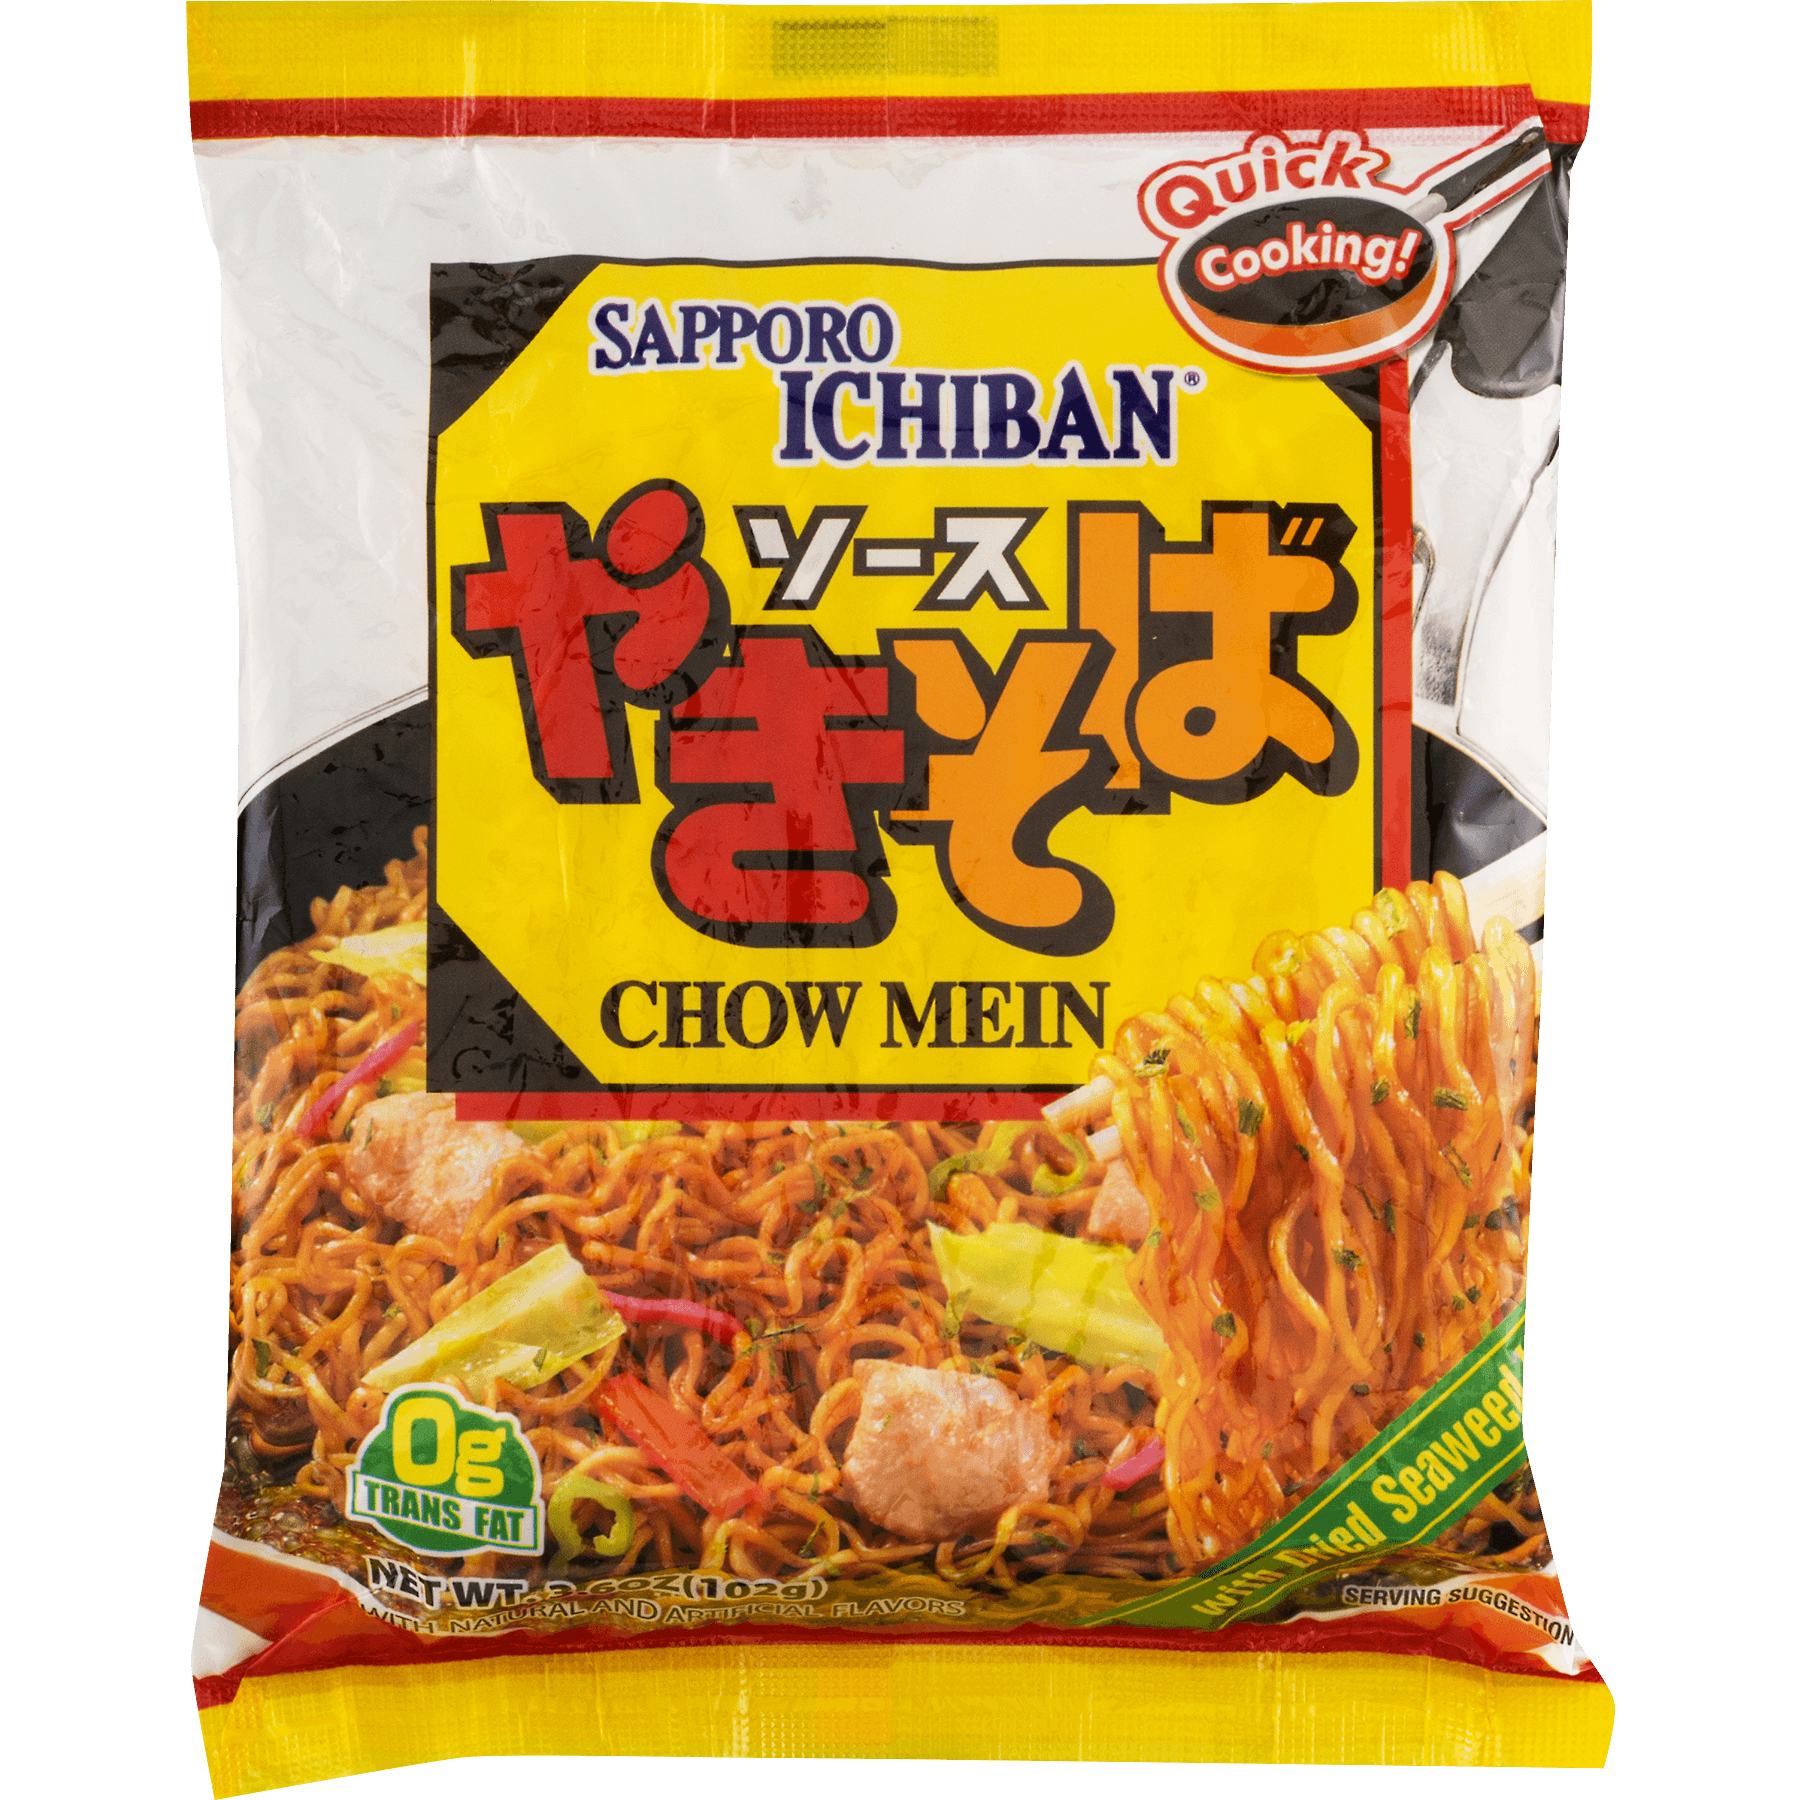 Sapporo Ichiban Chow Mein - 3.6 oz